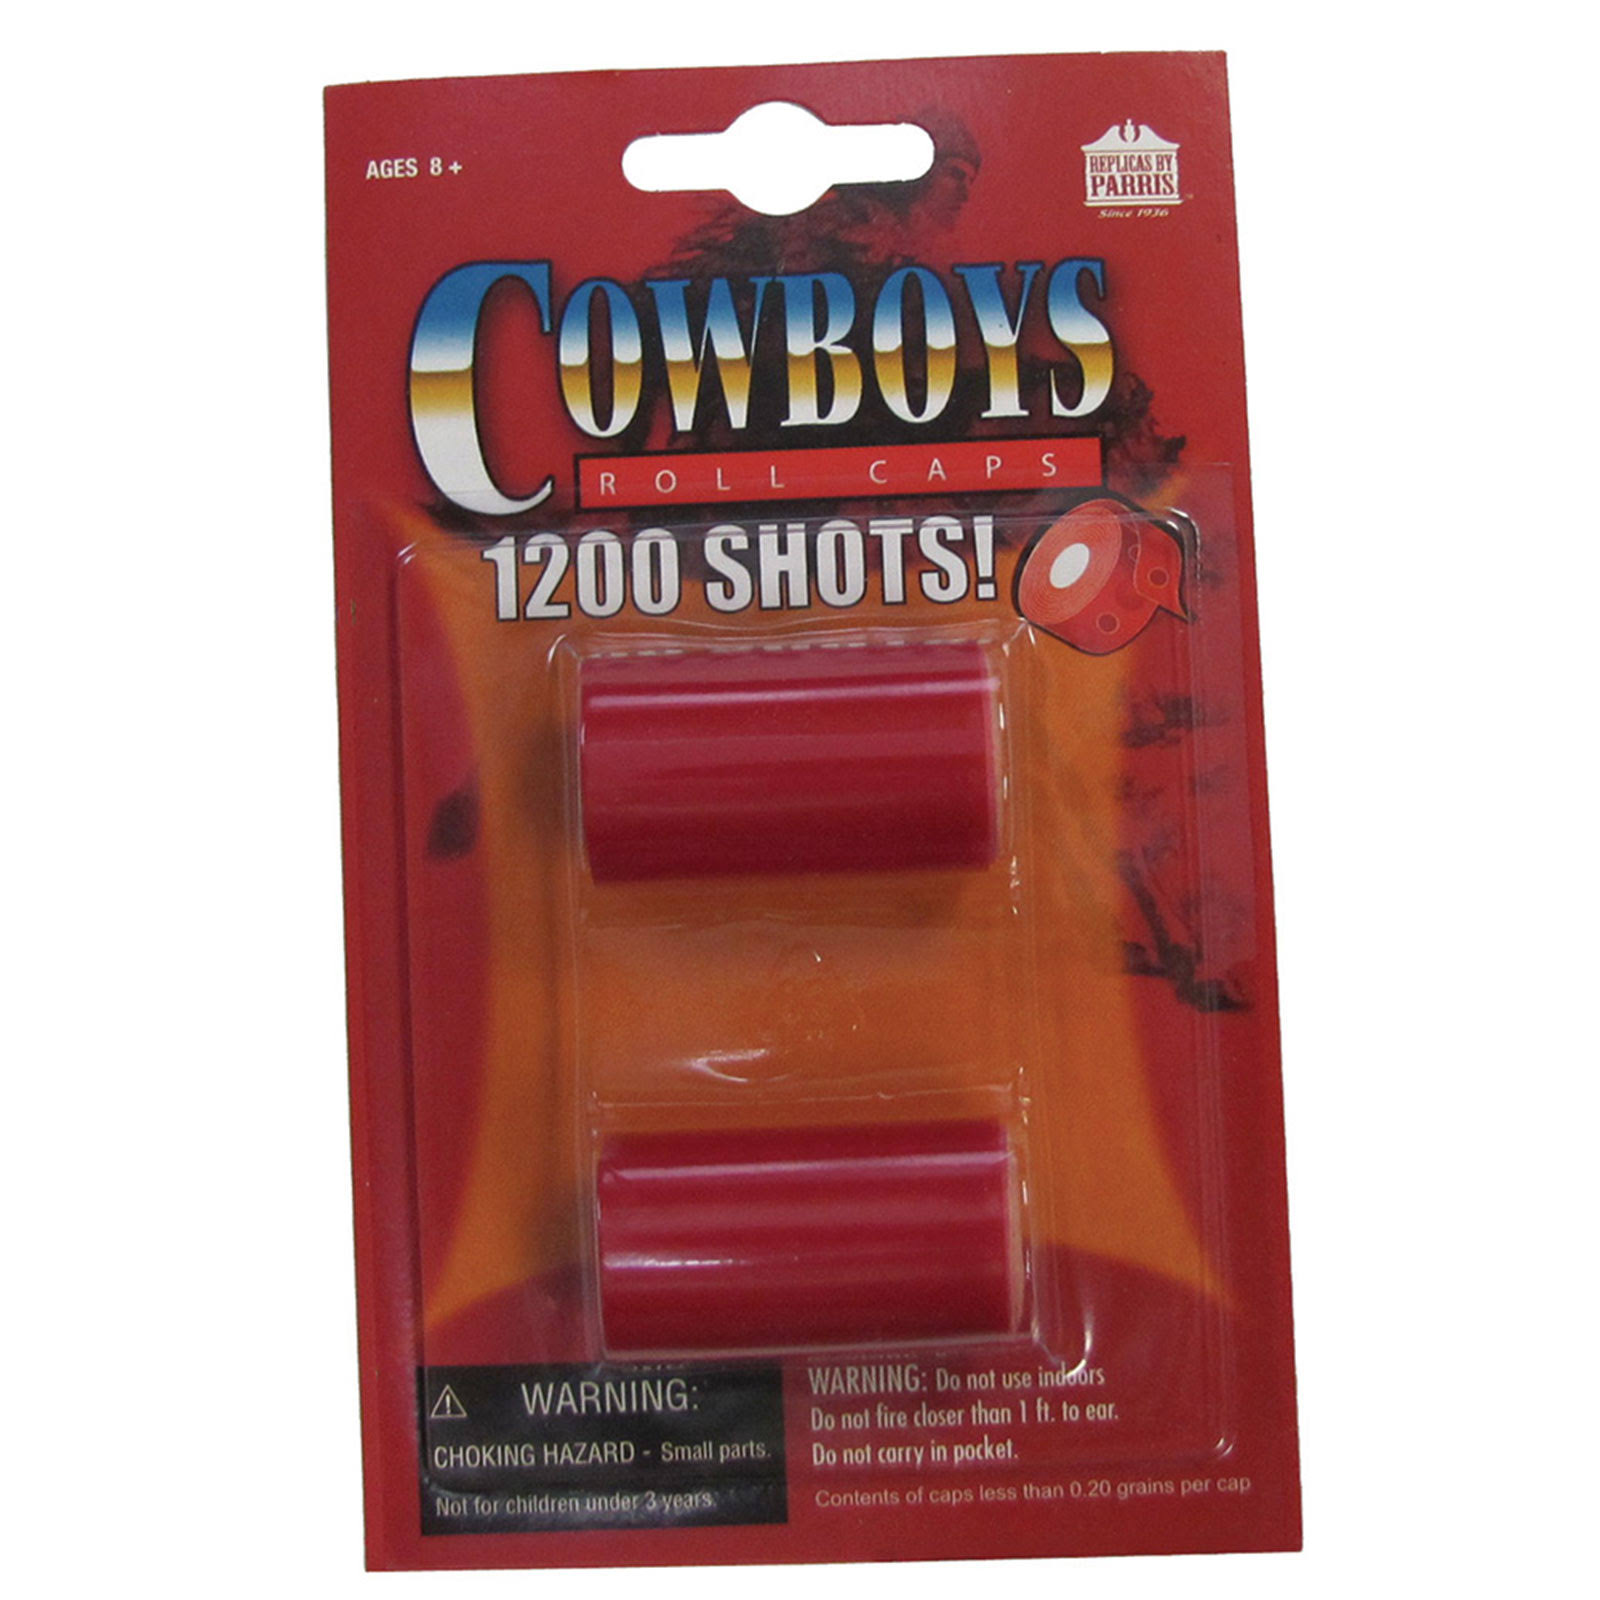 Parris Roll Caps 1200 Shots